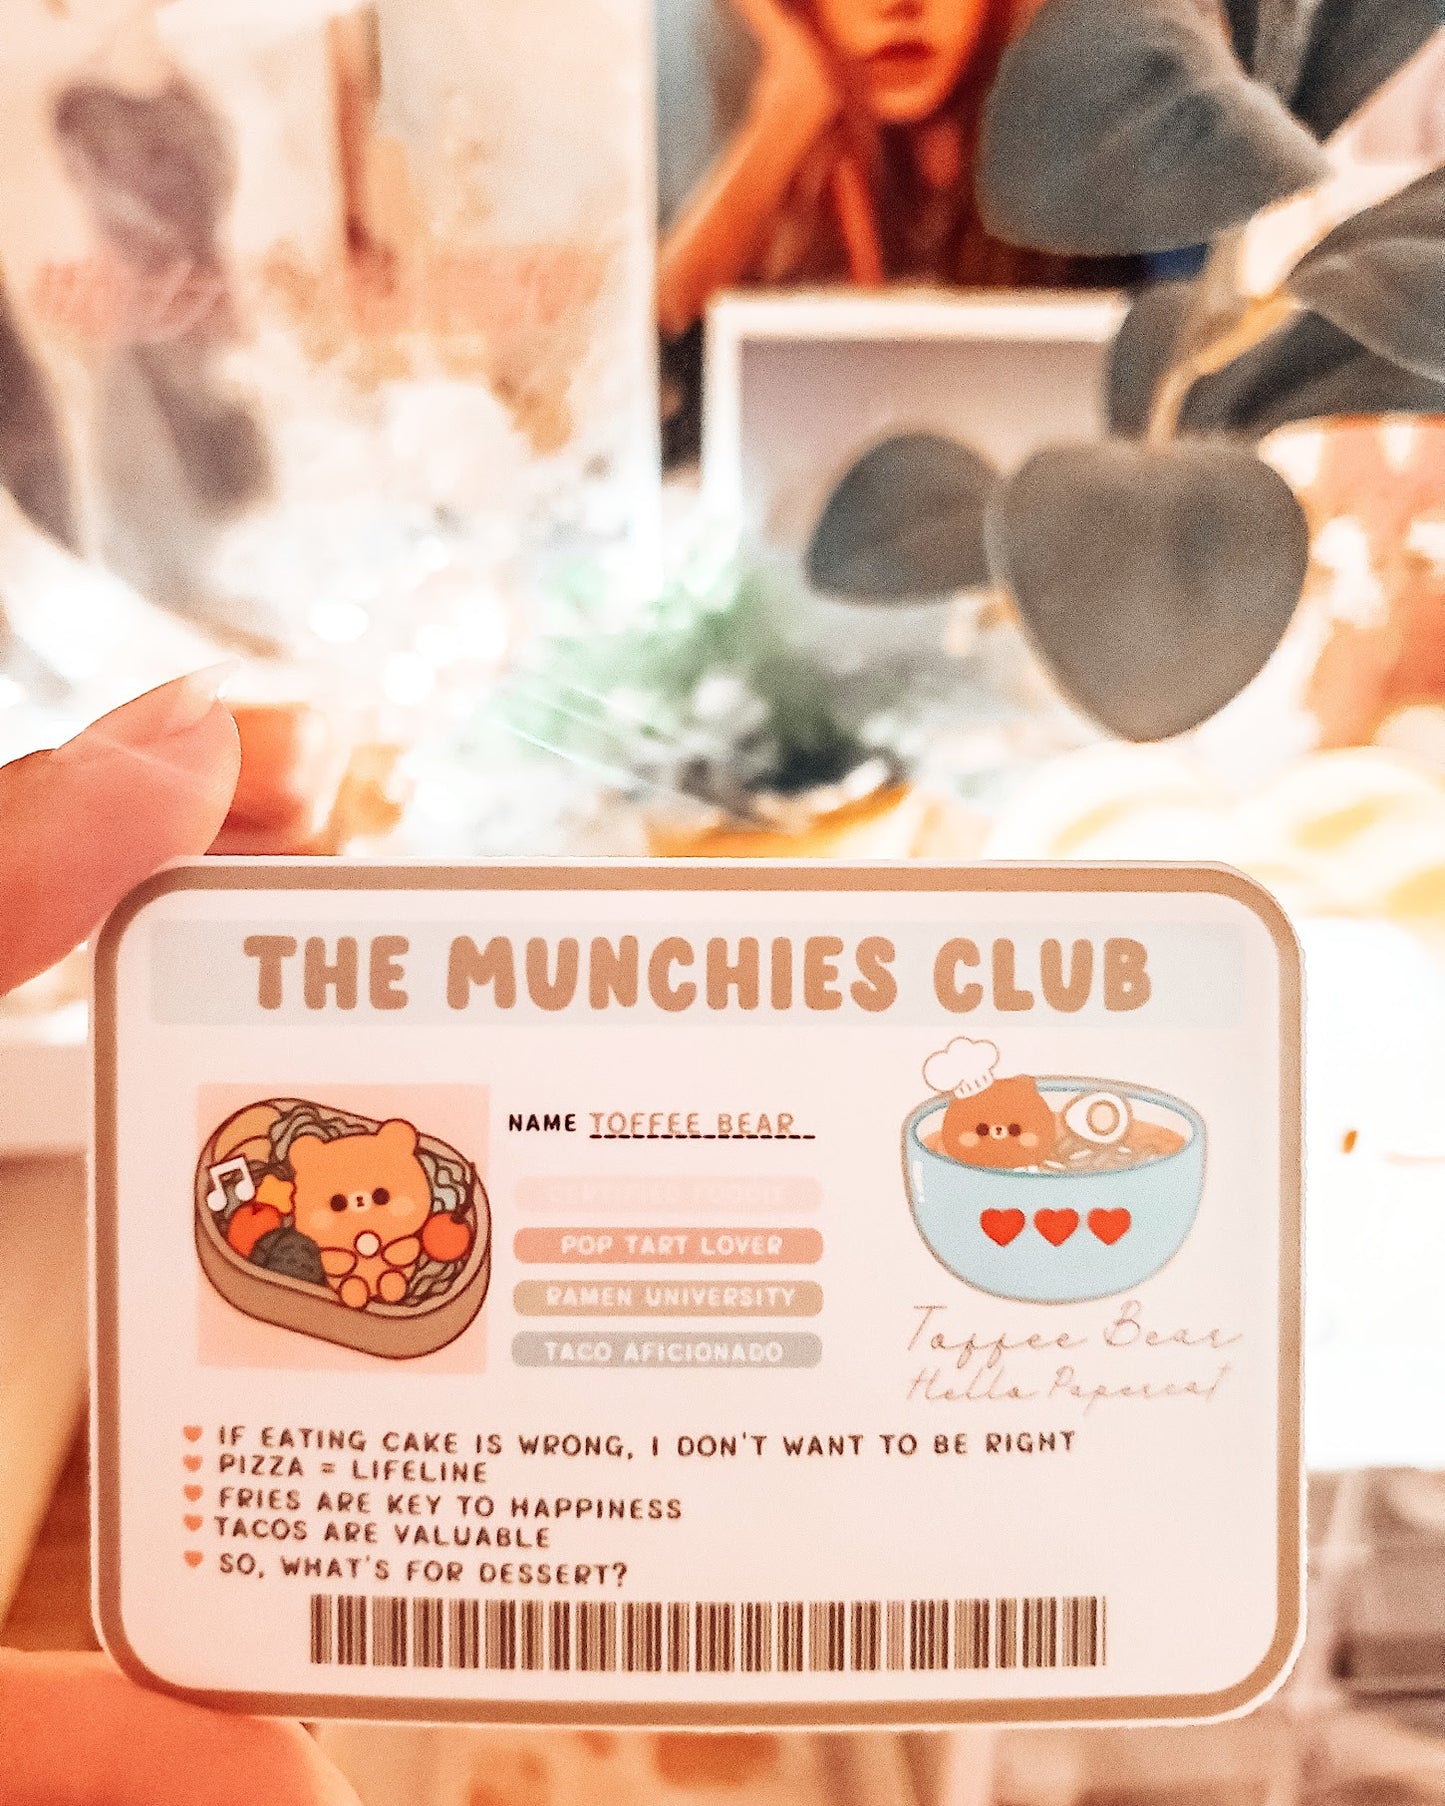 The Munchies Club membership card featuring Toffee Bear